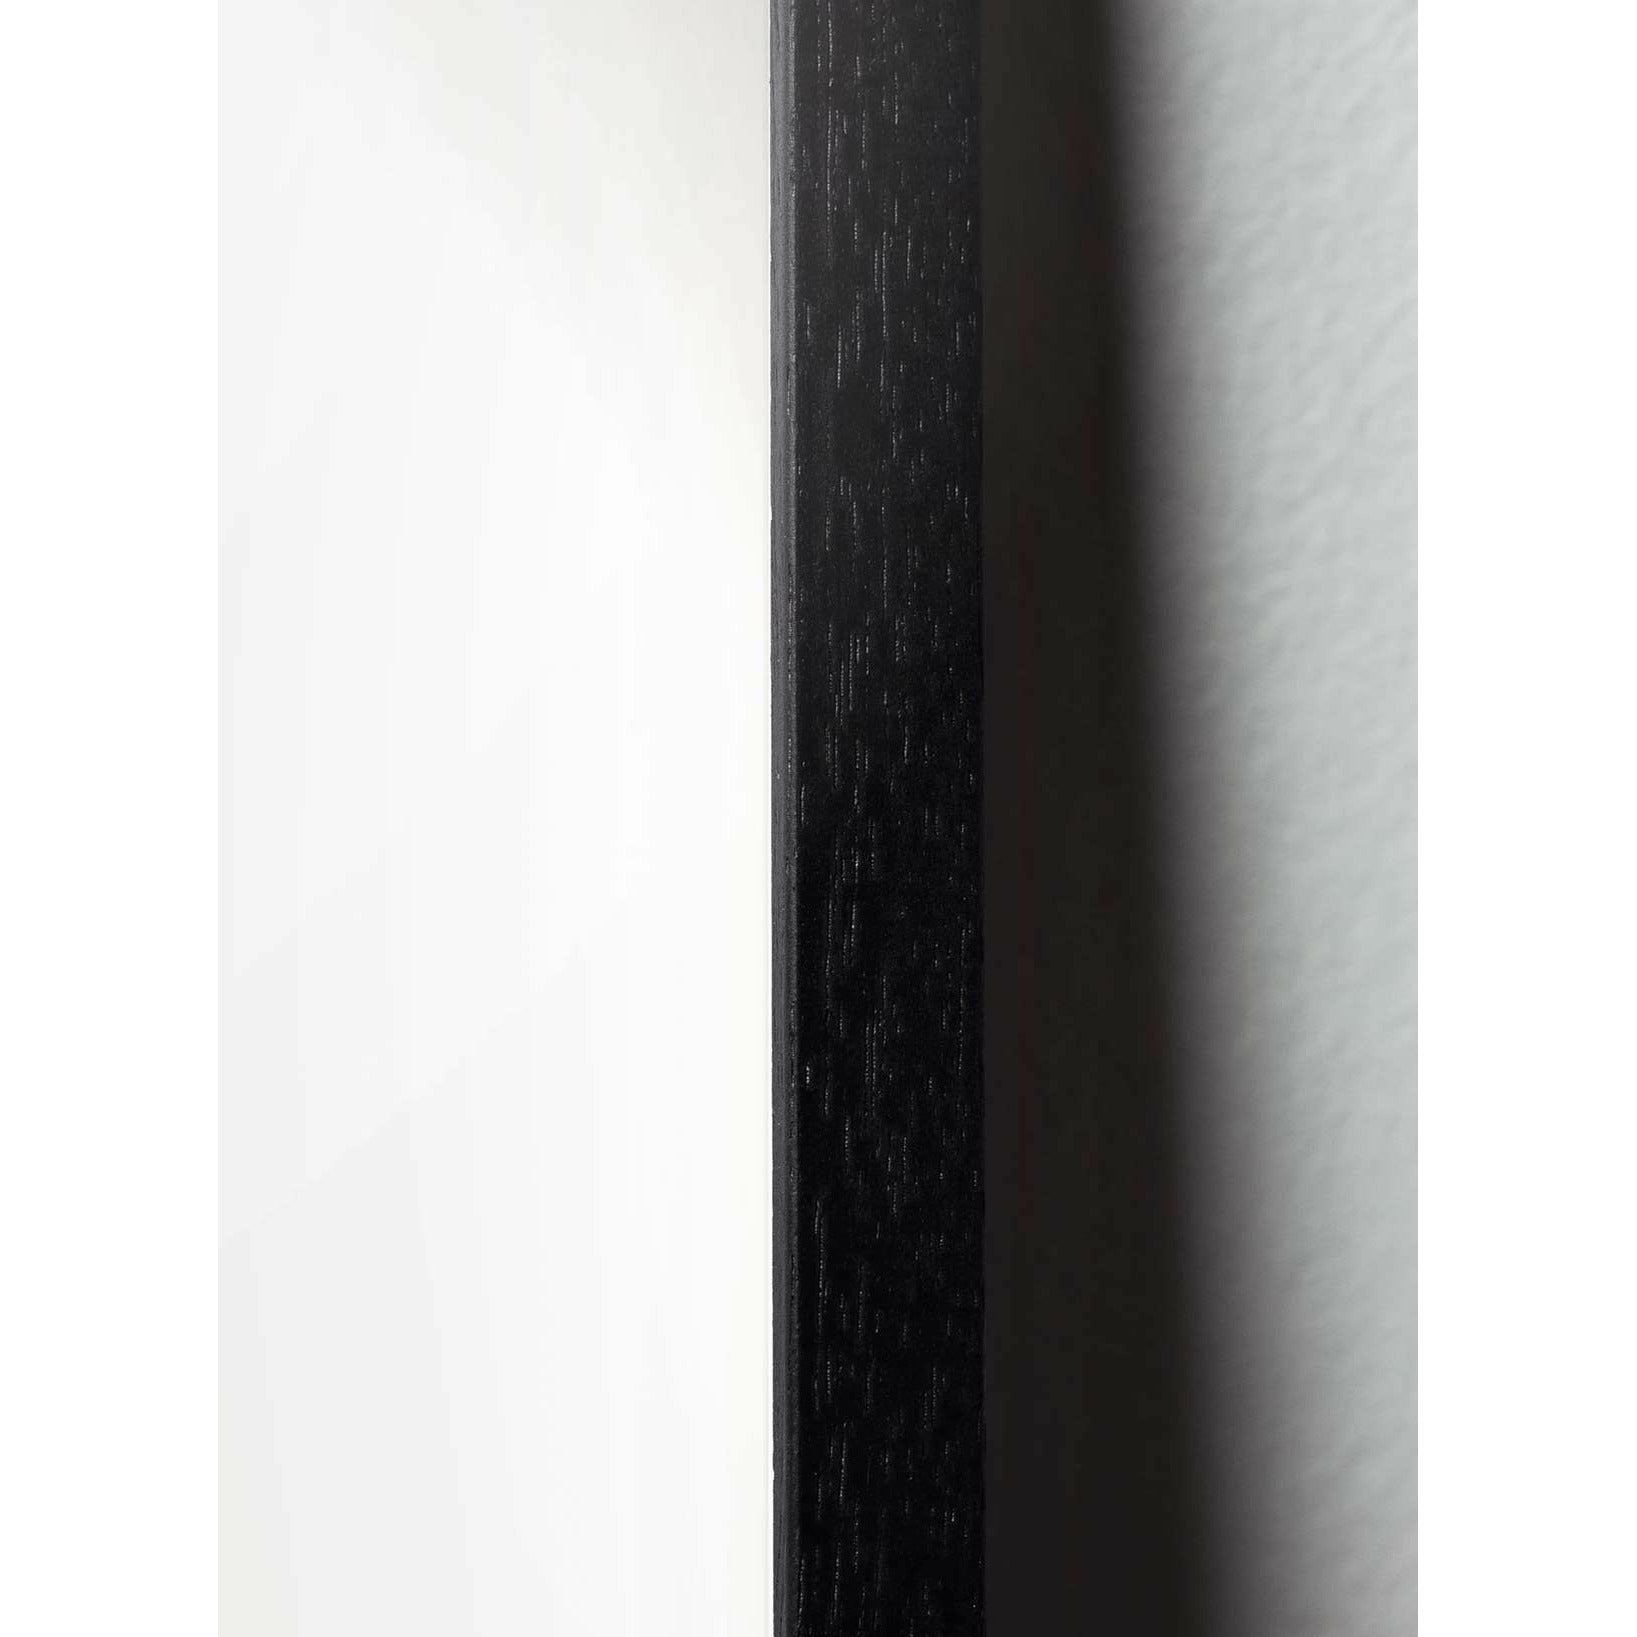 Brainchild Ant klassisk affisch, ram i svart -målat trä 70x100 cm, sandfärgad bakgrund